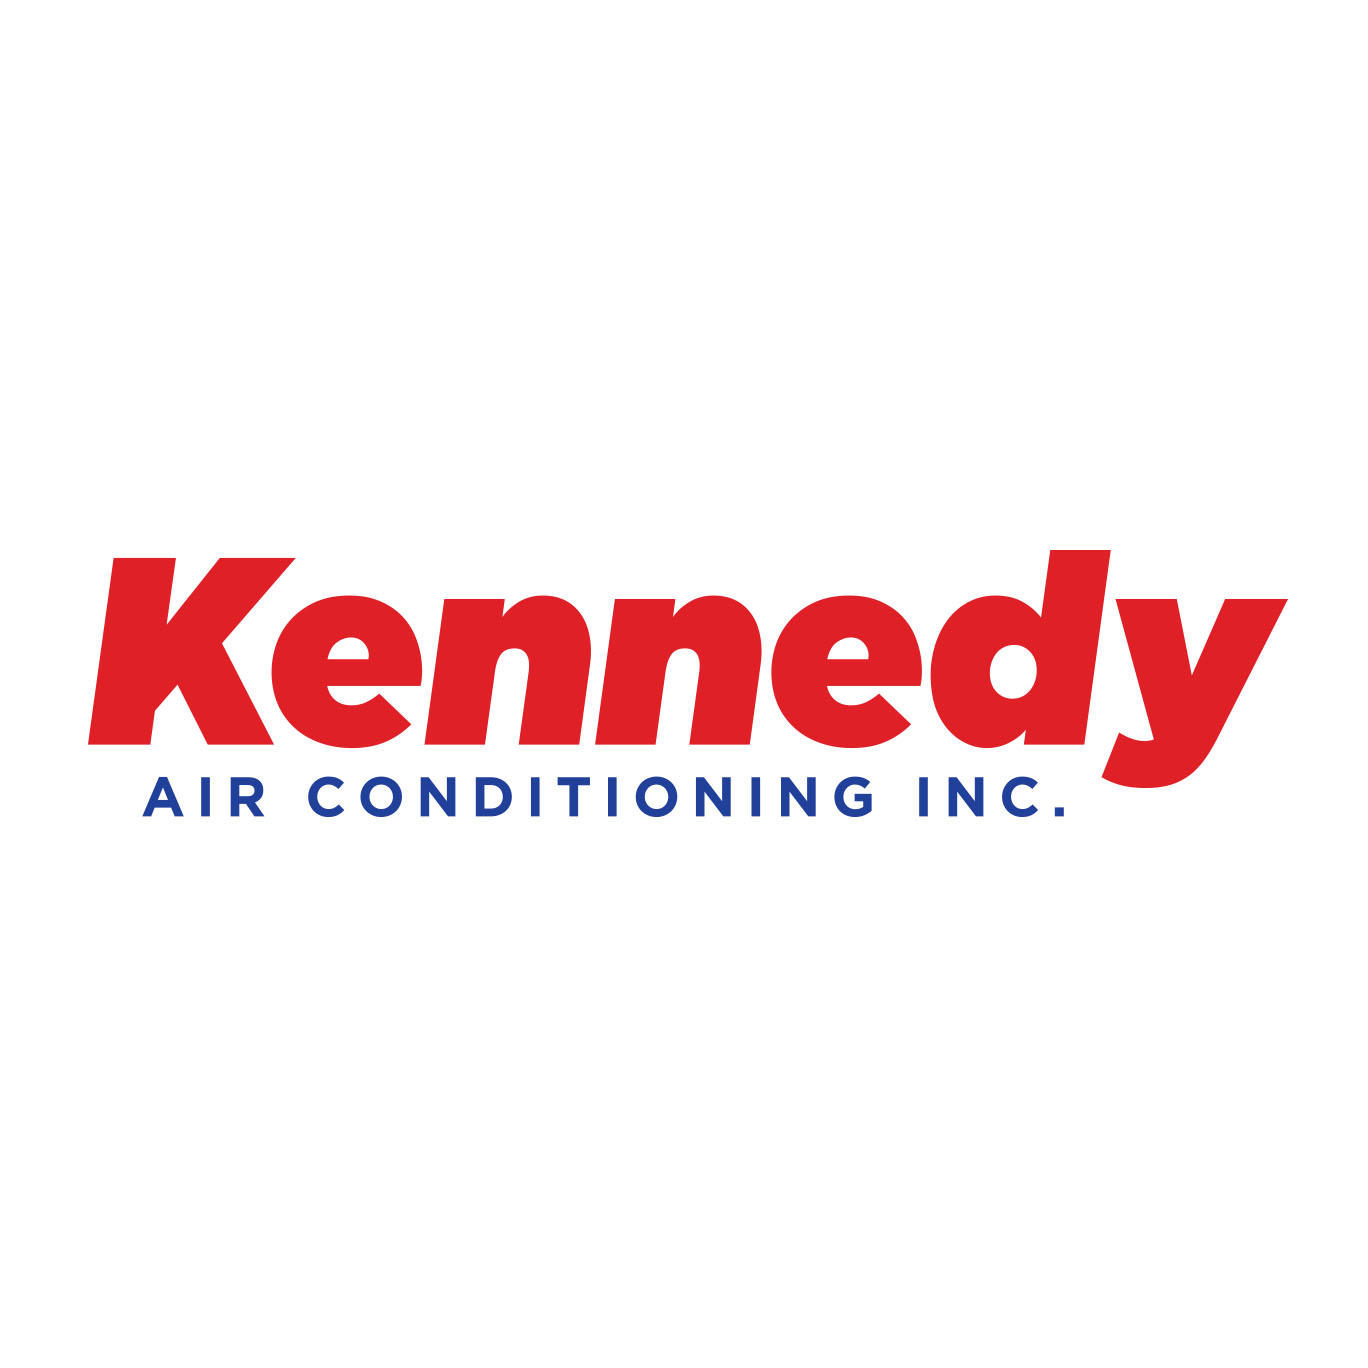 Kennedy Air Conditioning - Sherwood, AR 72120 - (501)834-2665 | ShowMeLocal.com